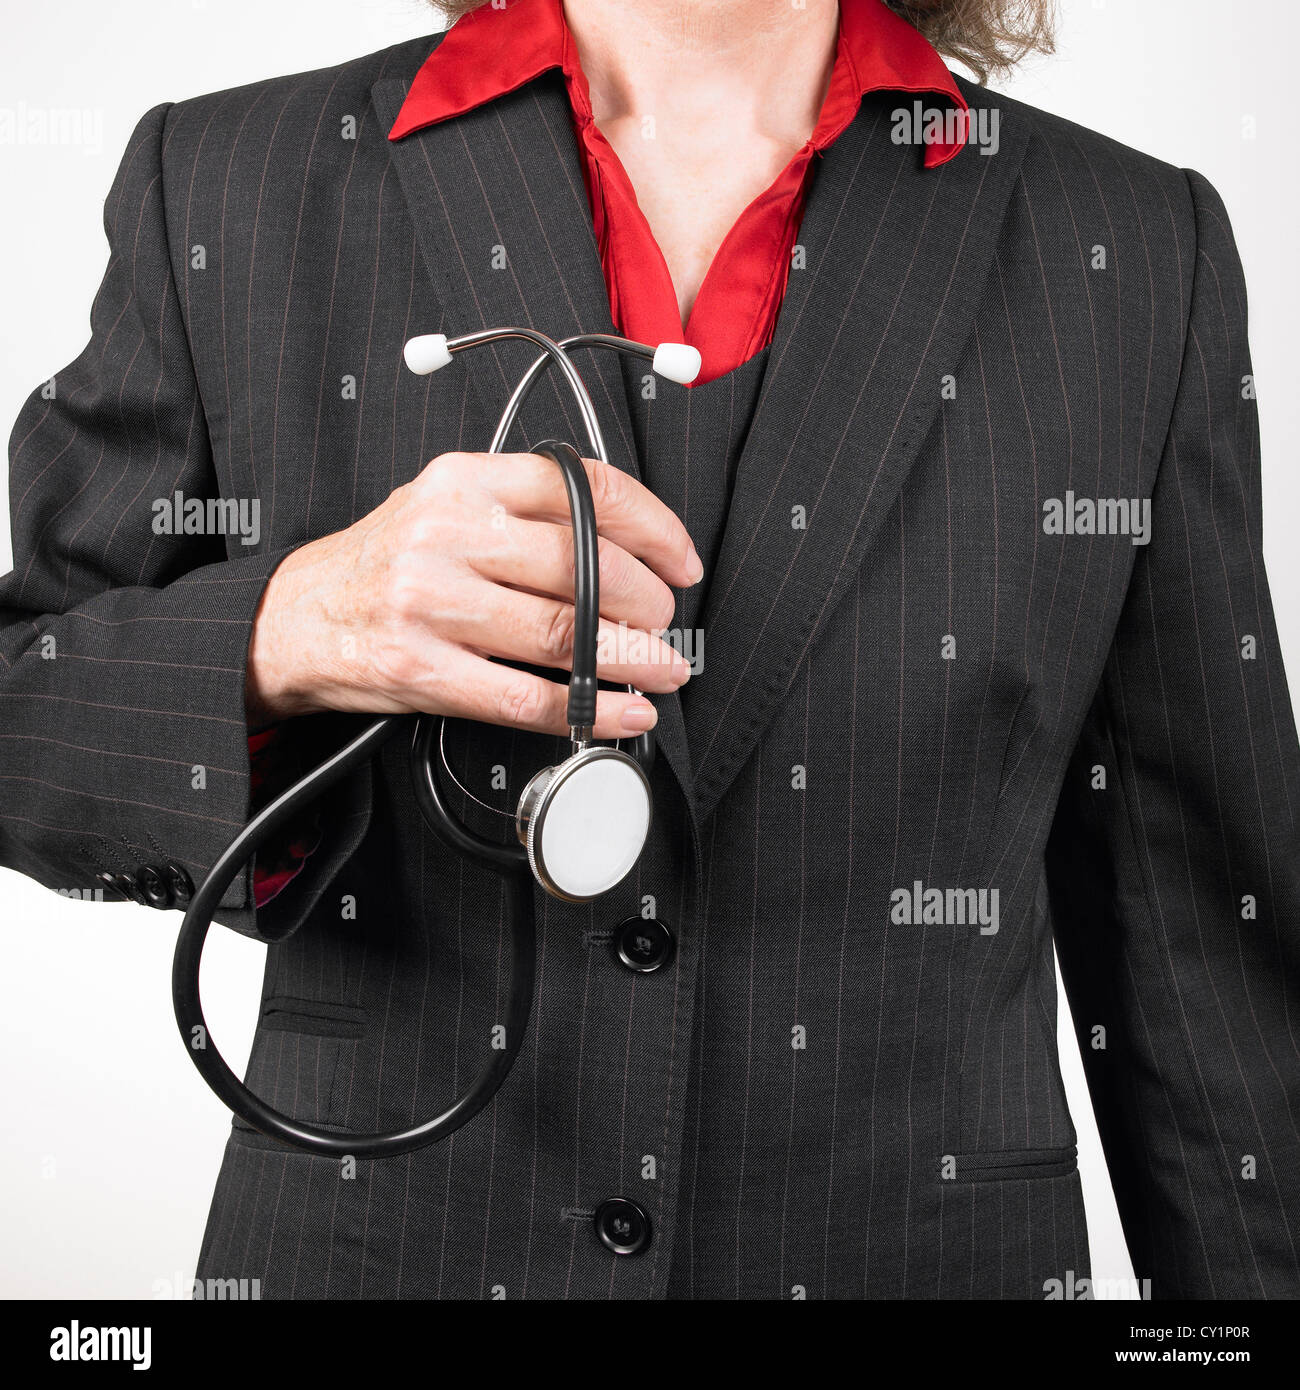 Woman GP wearing pinstripe suit holding stethoscope Stock Photo